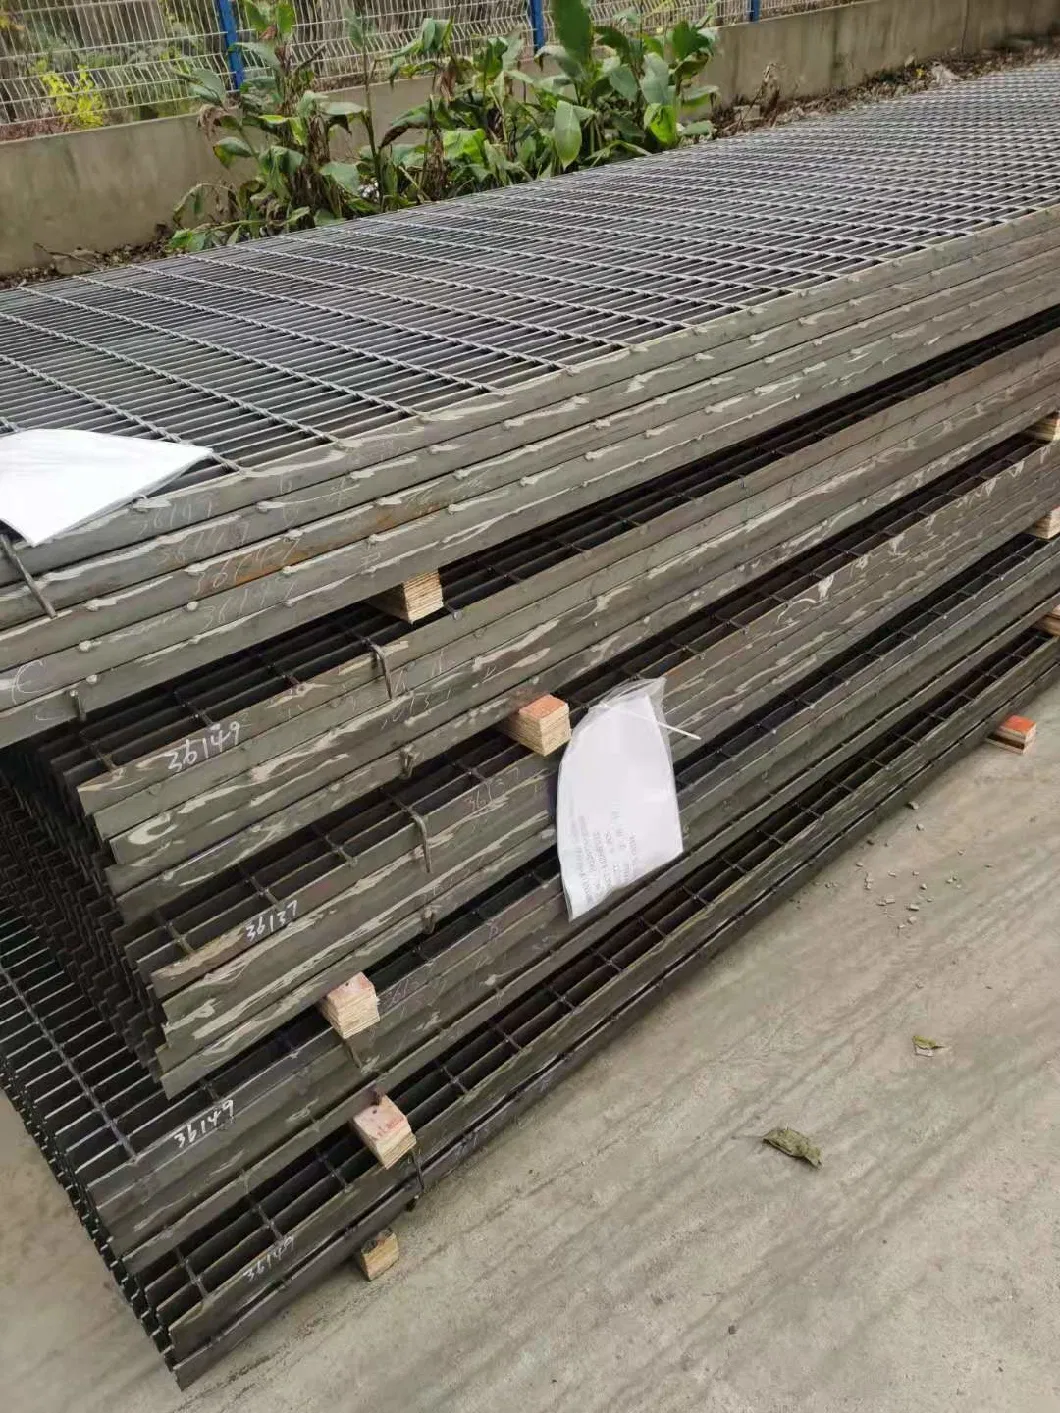 201 304 316 Customized Stainless Floor Grate Panel Catwalk Steel Grating Walkway Platform